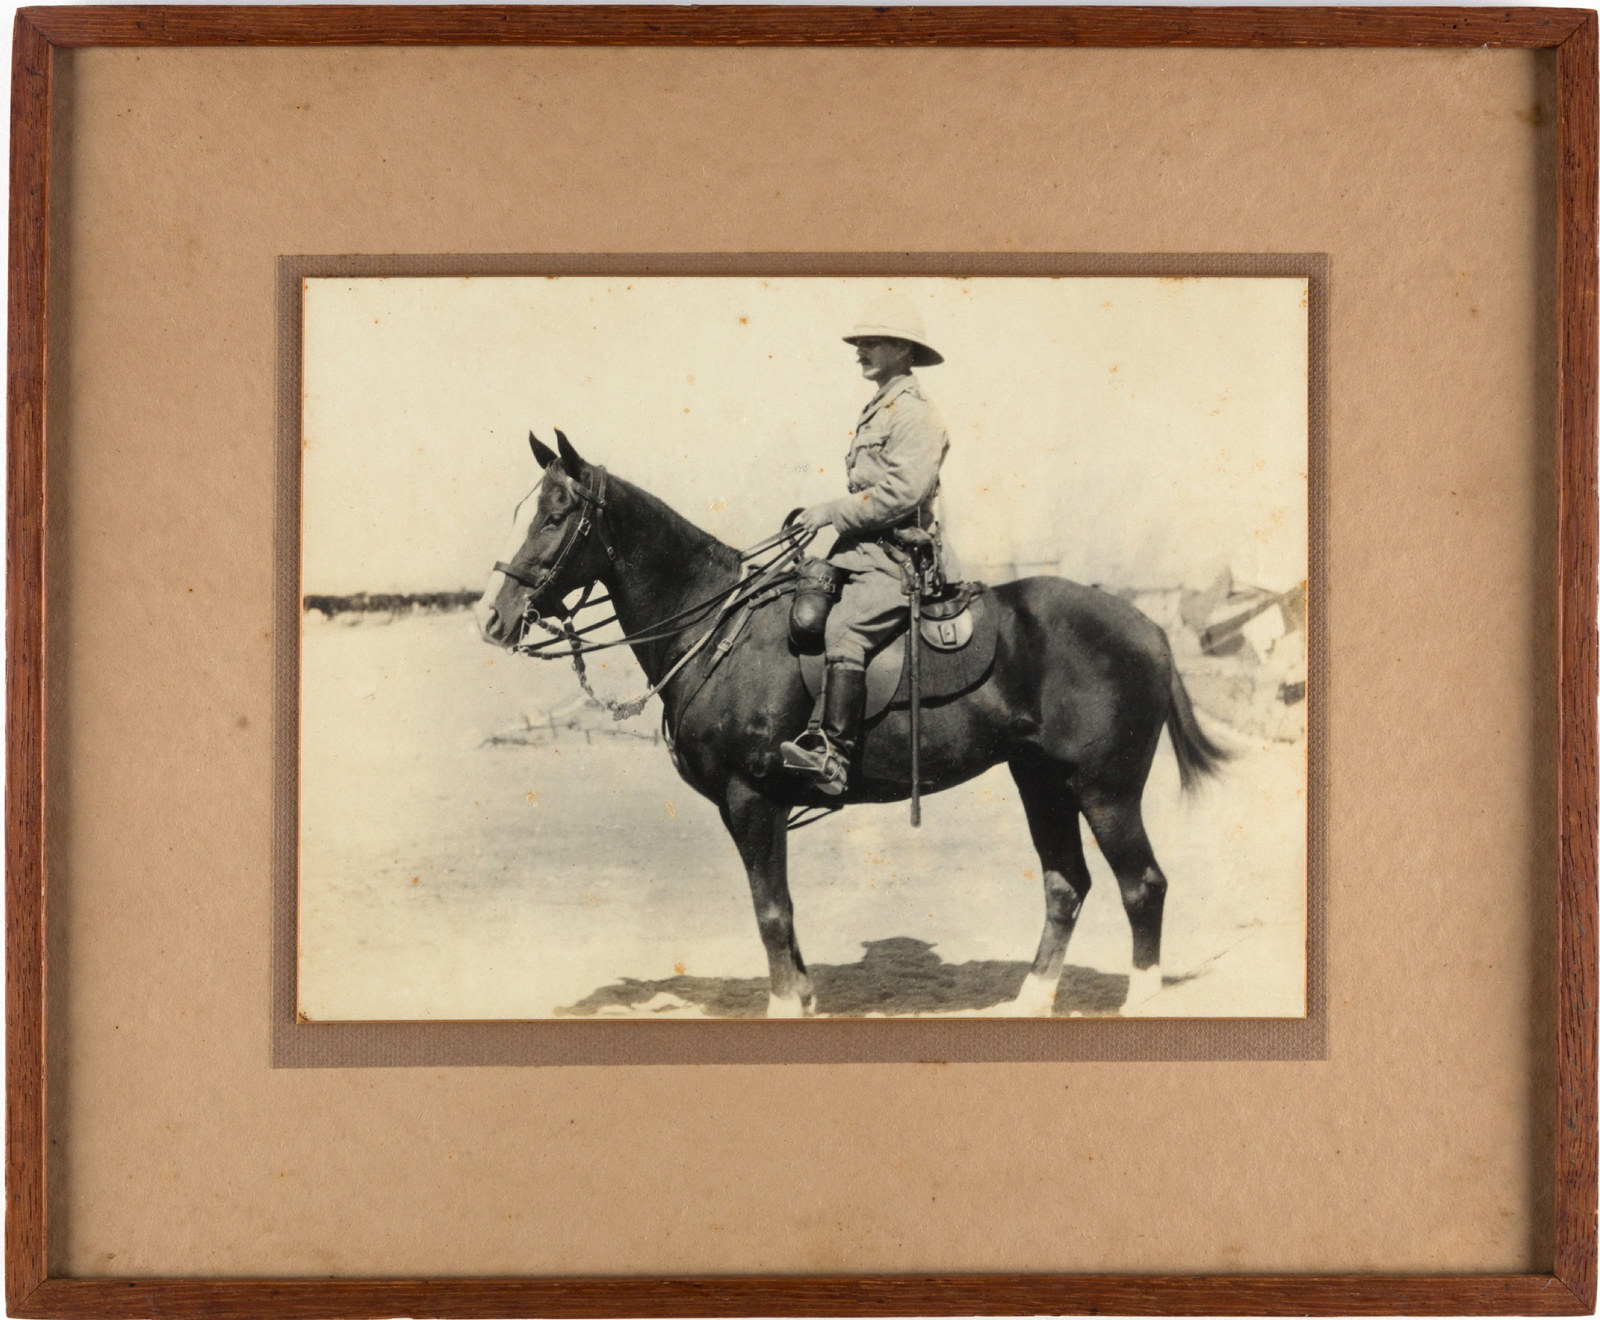 Framed photograph of 2nd Lieutenant Norman Matthew Pearce mounted on his horse, Maadi, Egypt, 1915